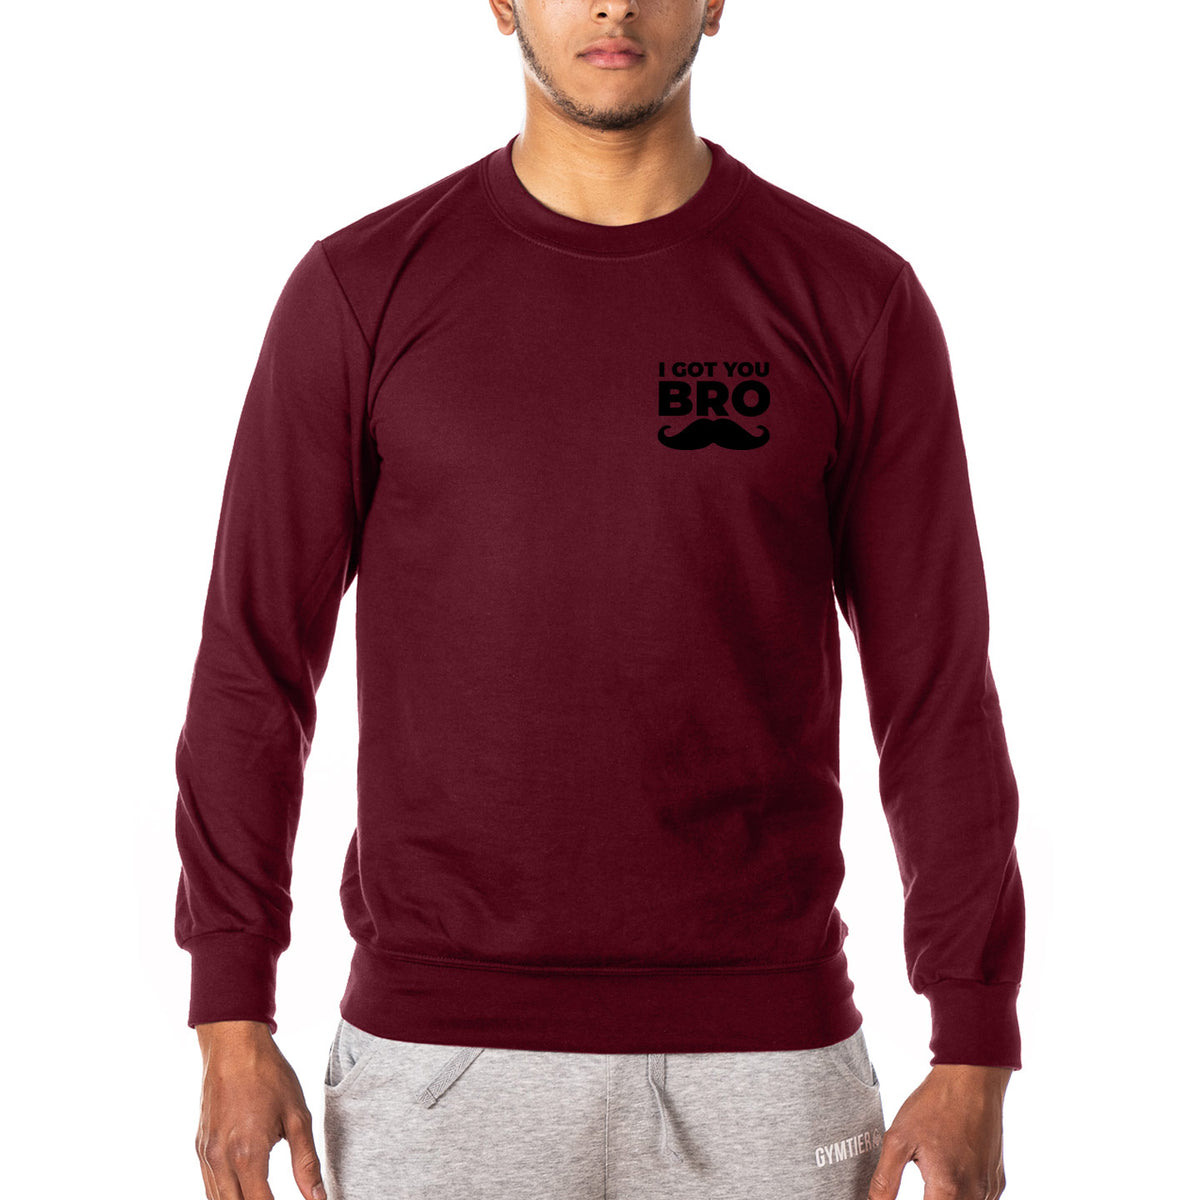 I Got You Bro - Gym Sweatshirt